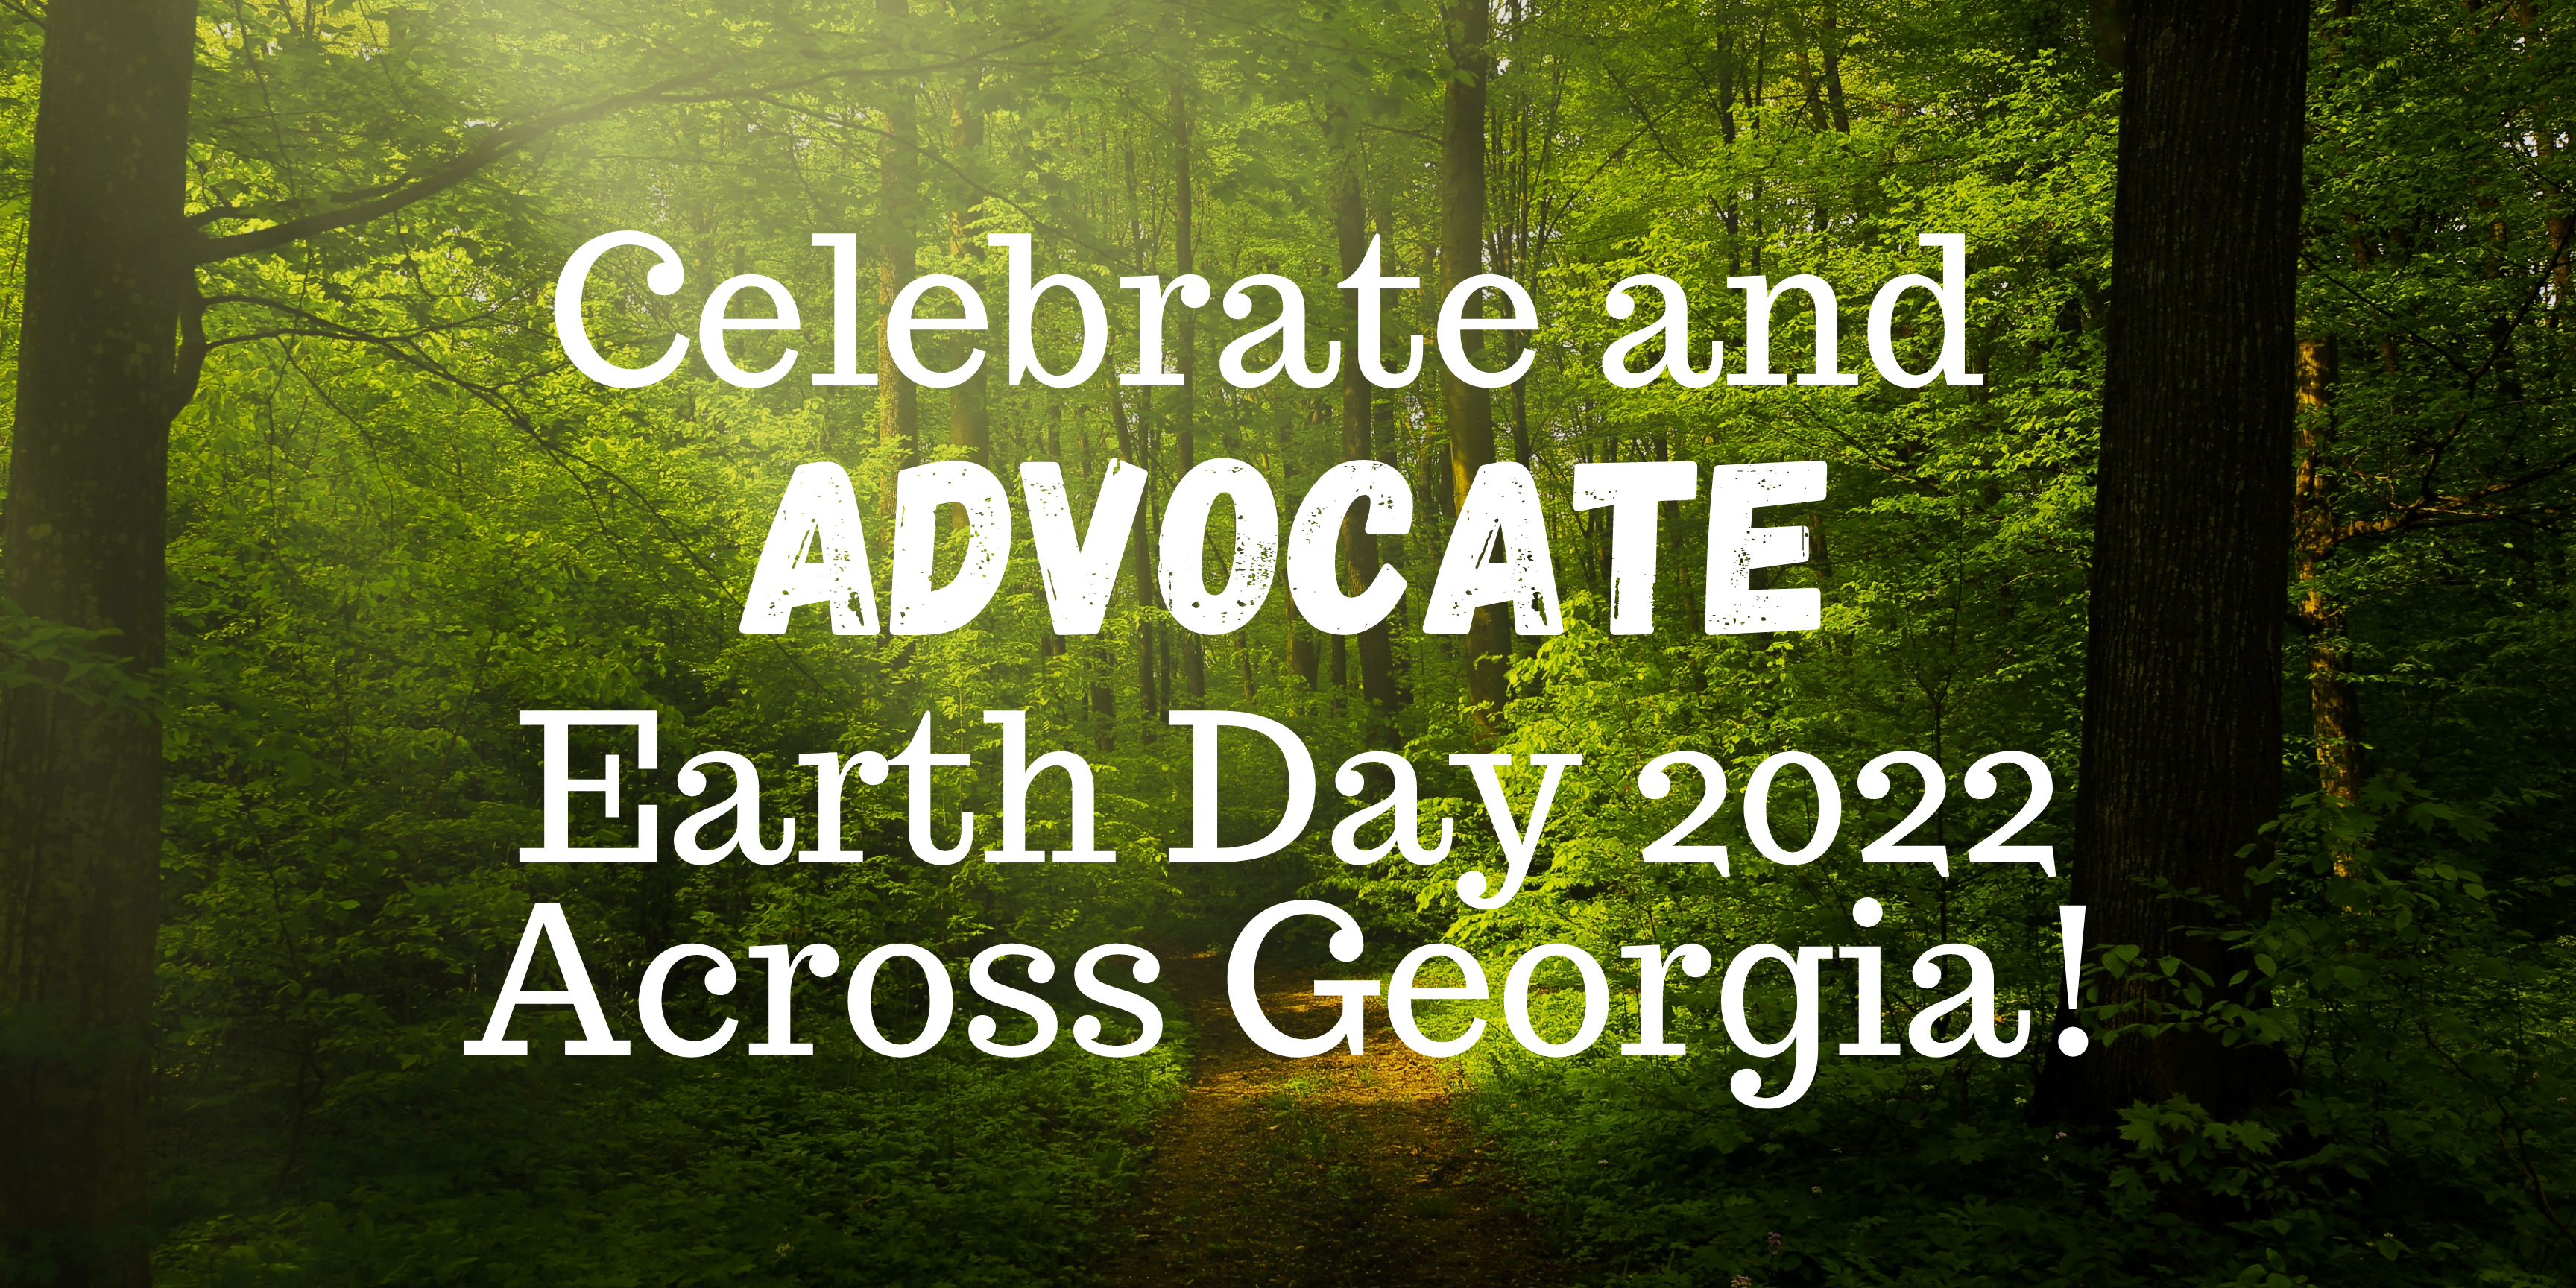 Celebrate and advocate Earth Day 2022 across Georgia